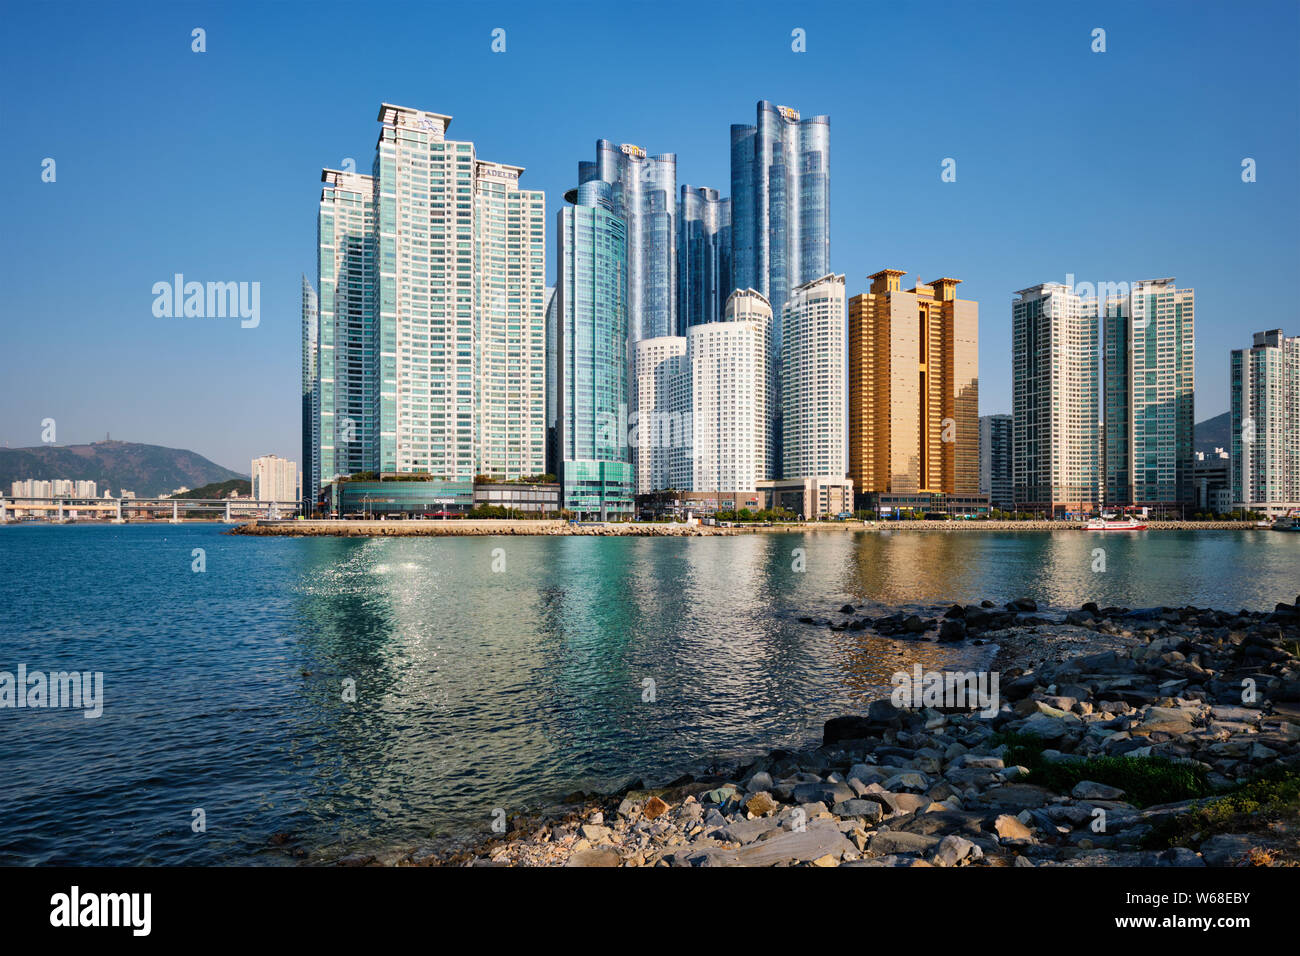 Marine city skyscrapers in Busan, South Korea Stock Photo